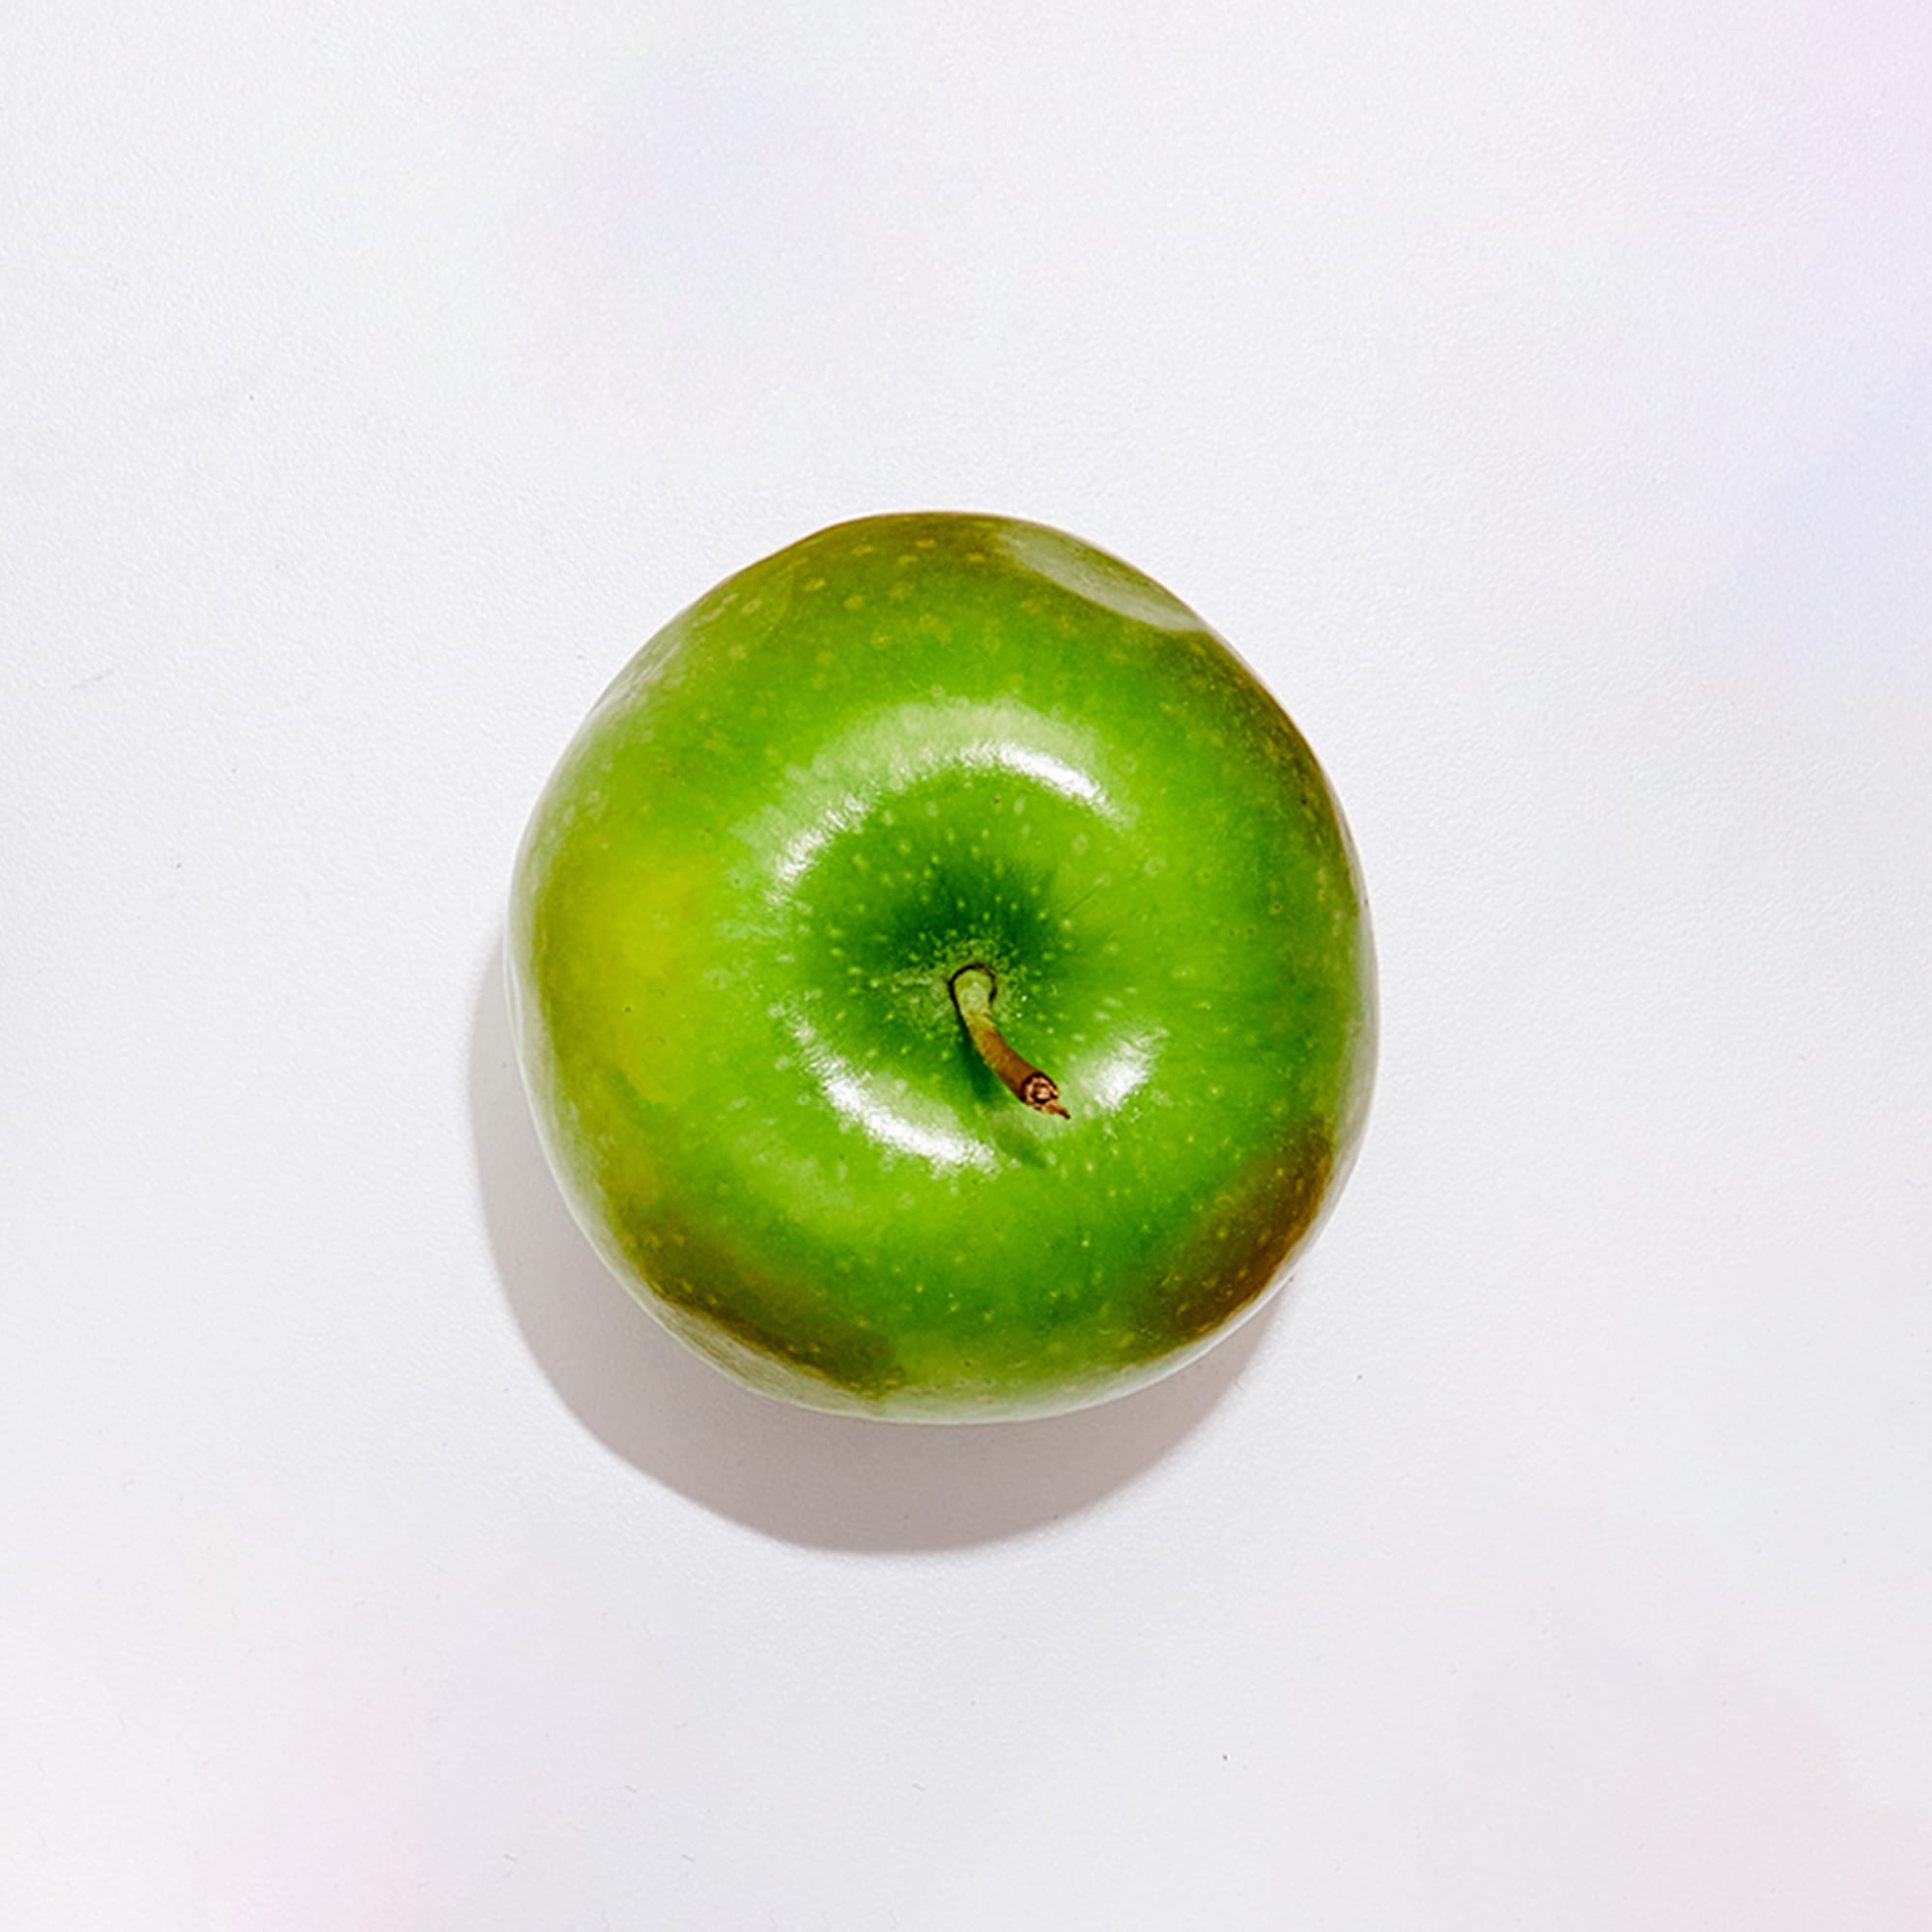 The Best Apple Varieties for Eating Fresh